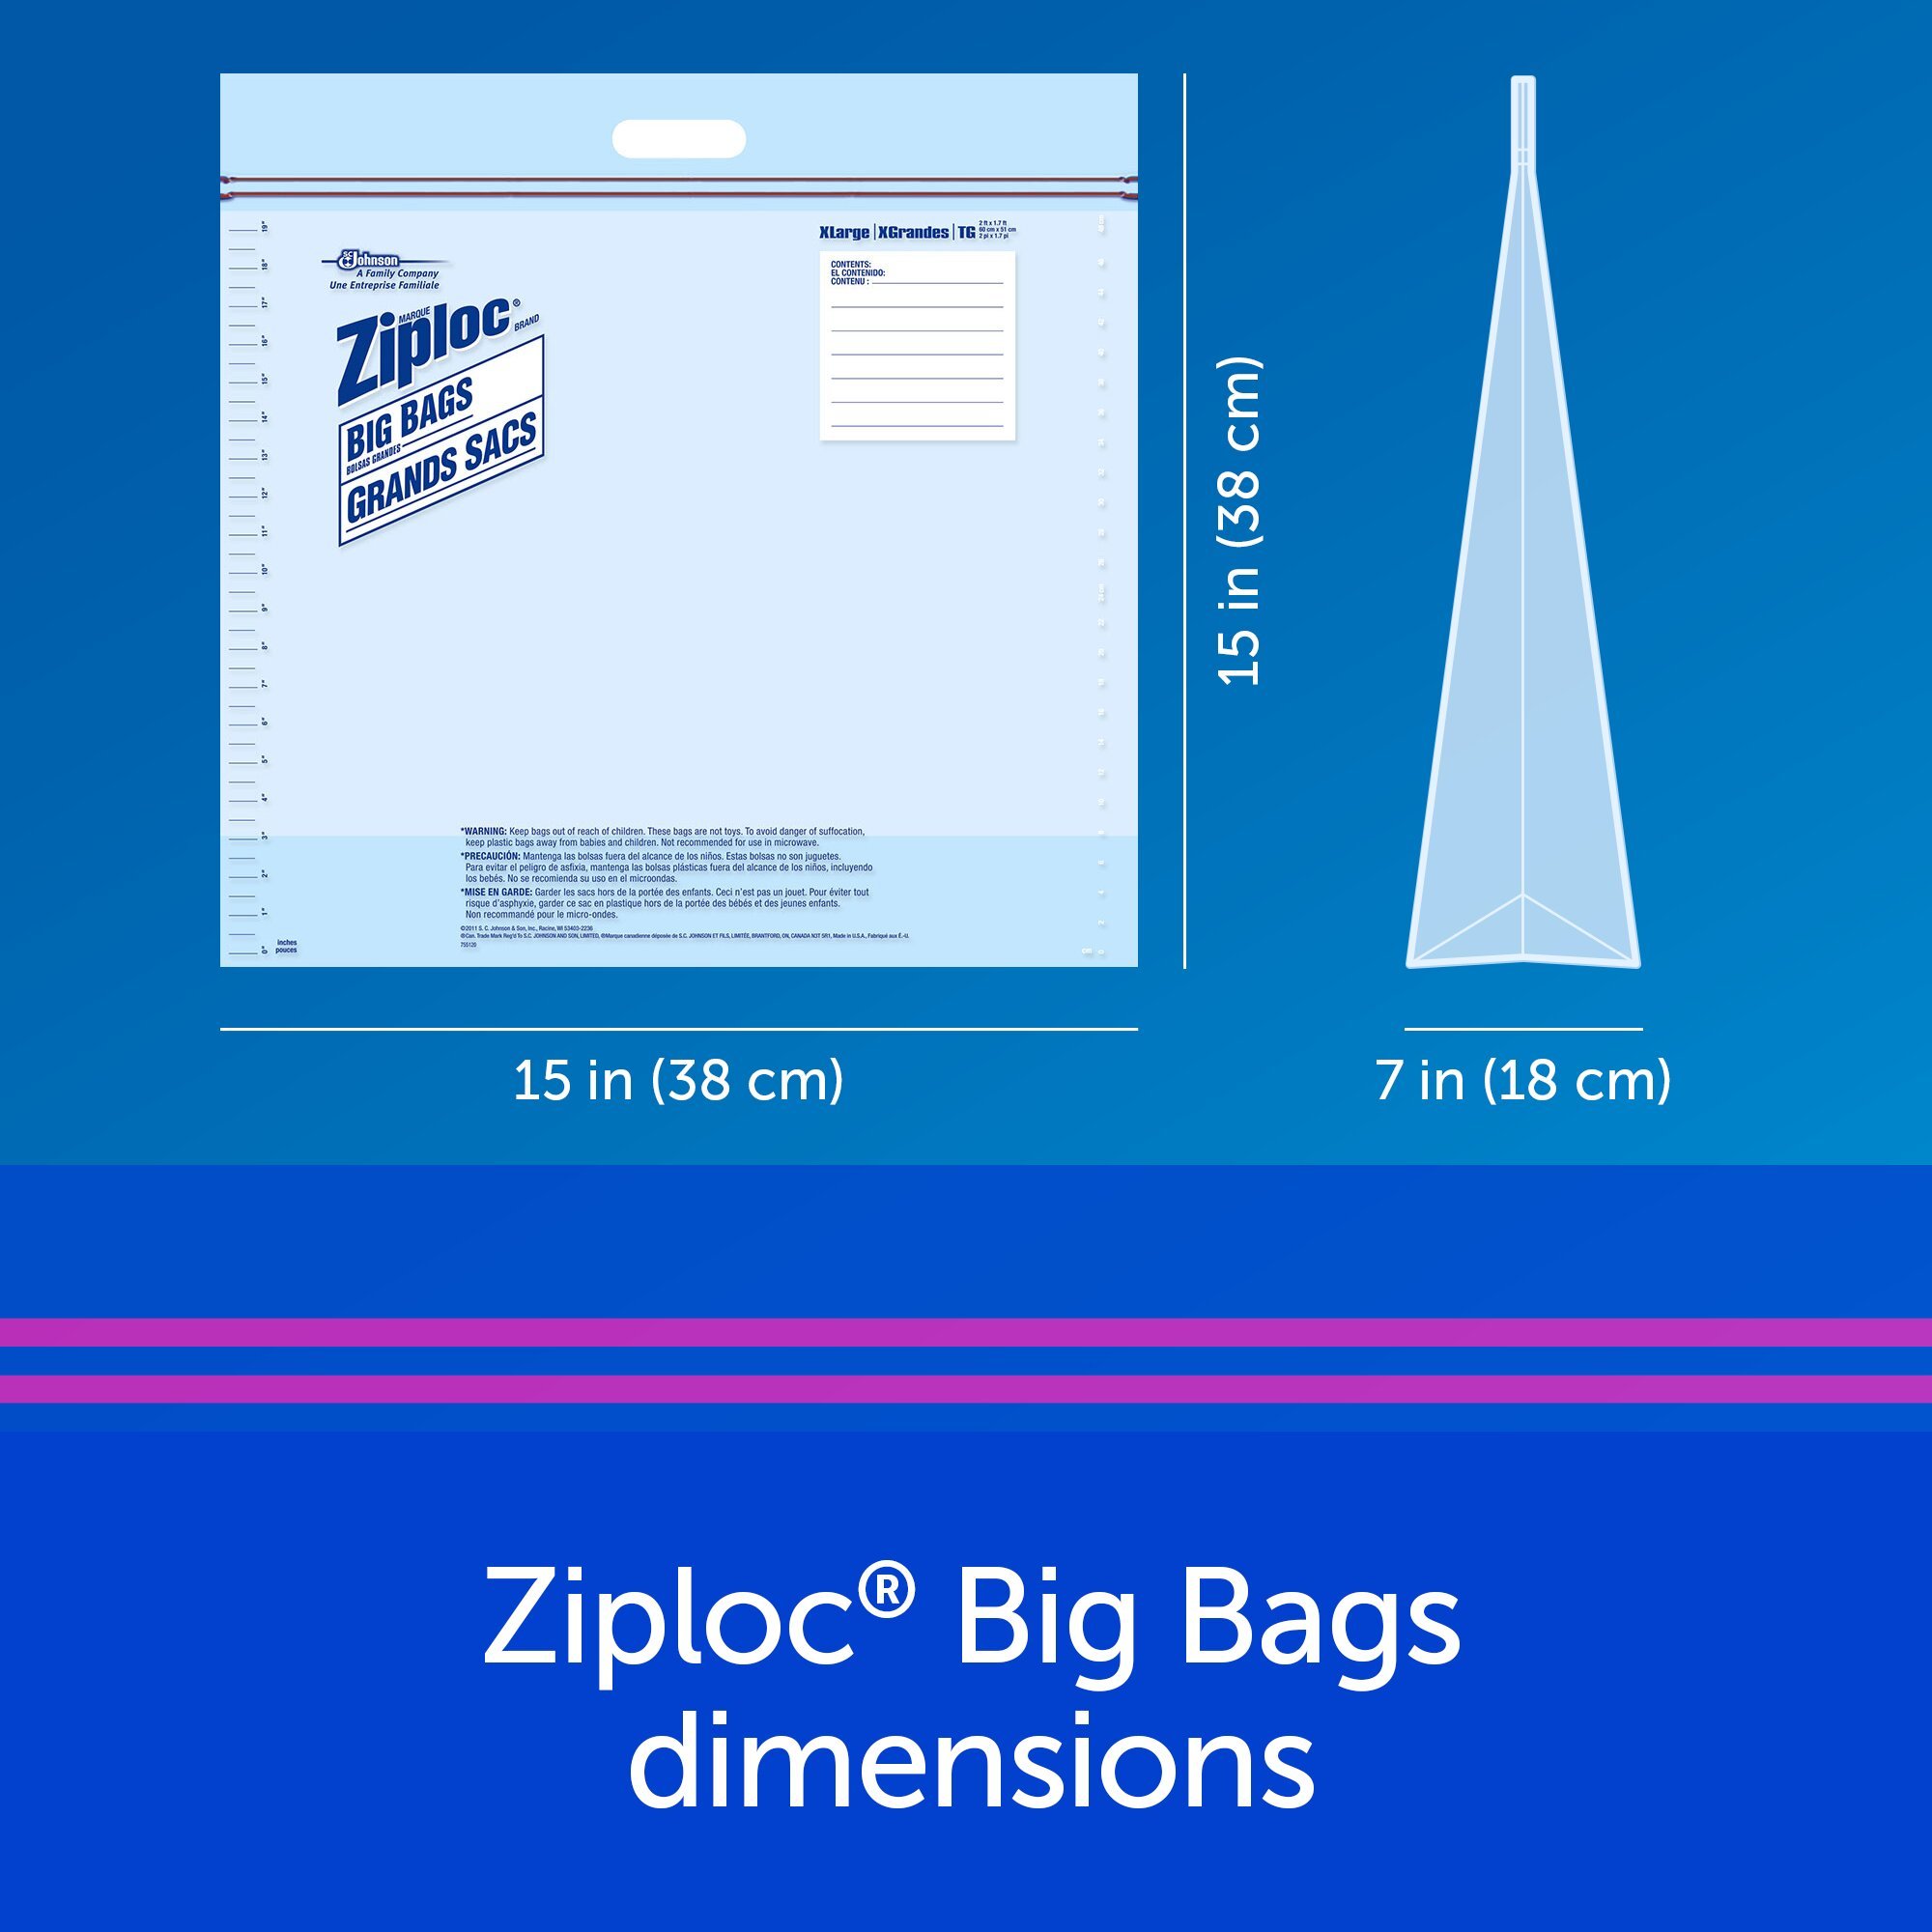 Ziploc Big Bag 3 Gallon Large Storage Bags (5-Count) - Dazey's Supply